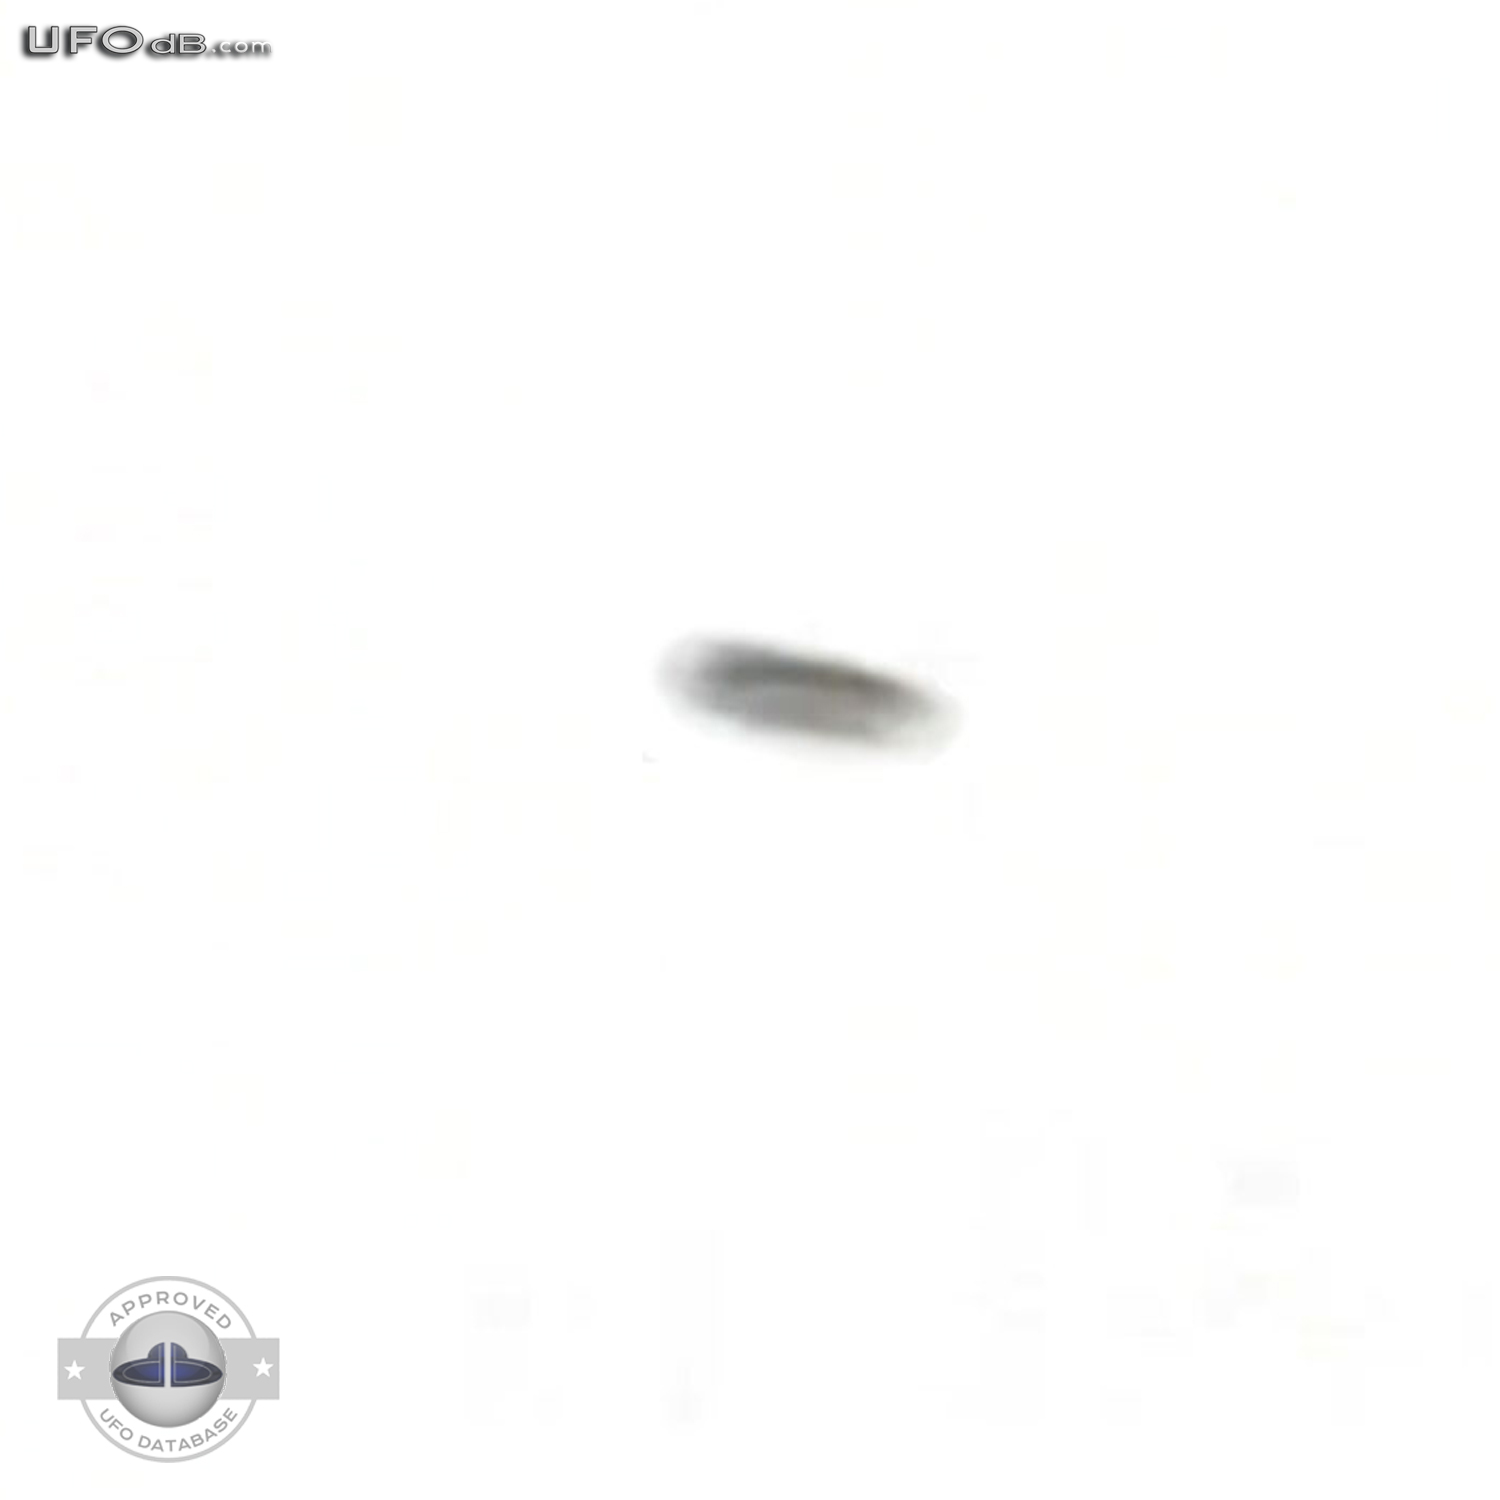 Camera test captures UFO in the sky in Mimon, Liberec, Czech Republic UFO Picture #371-4